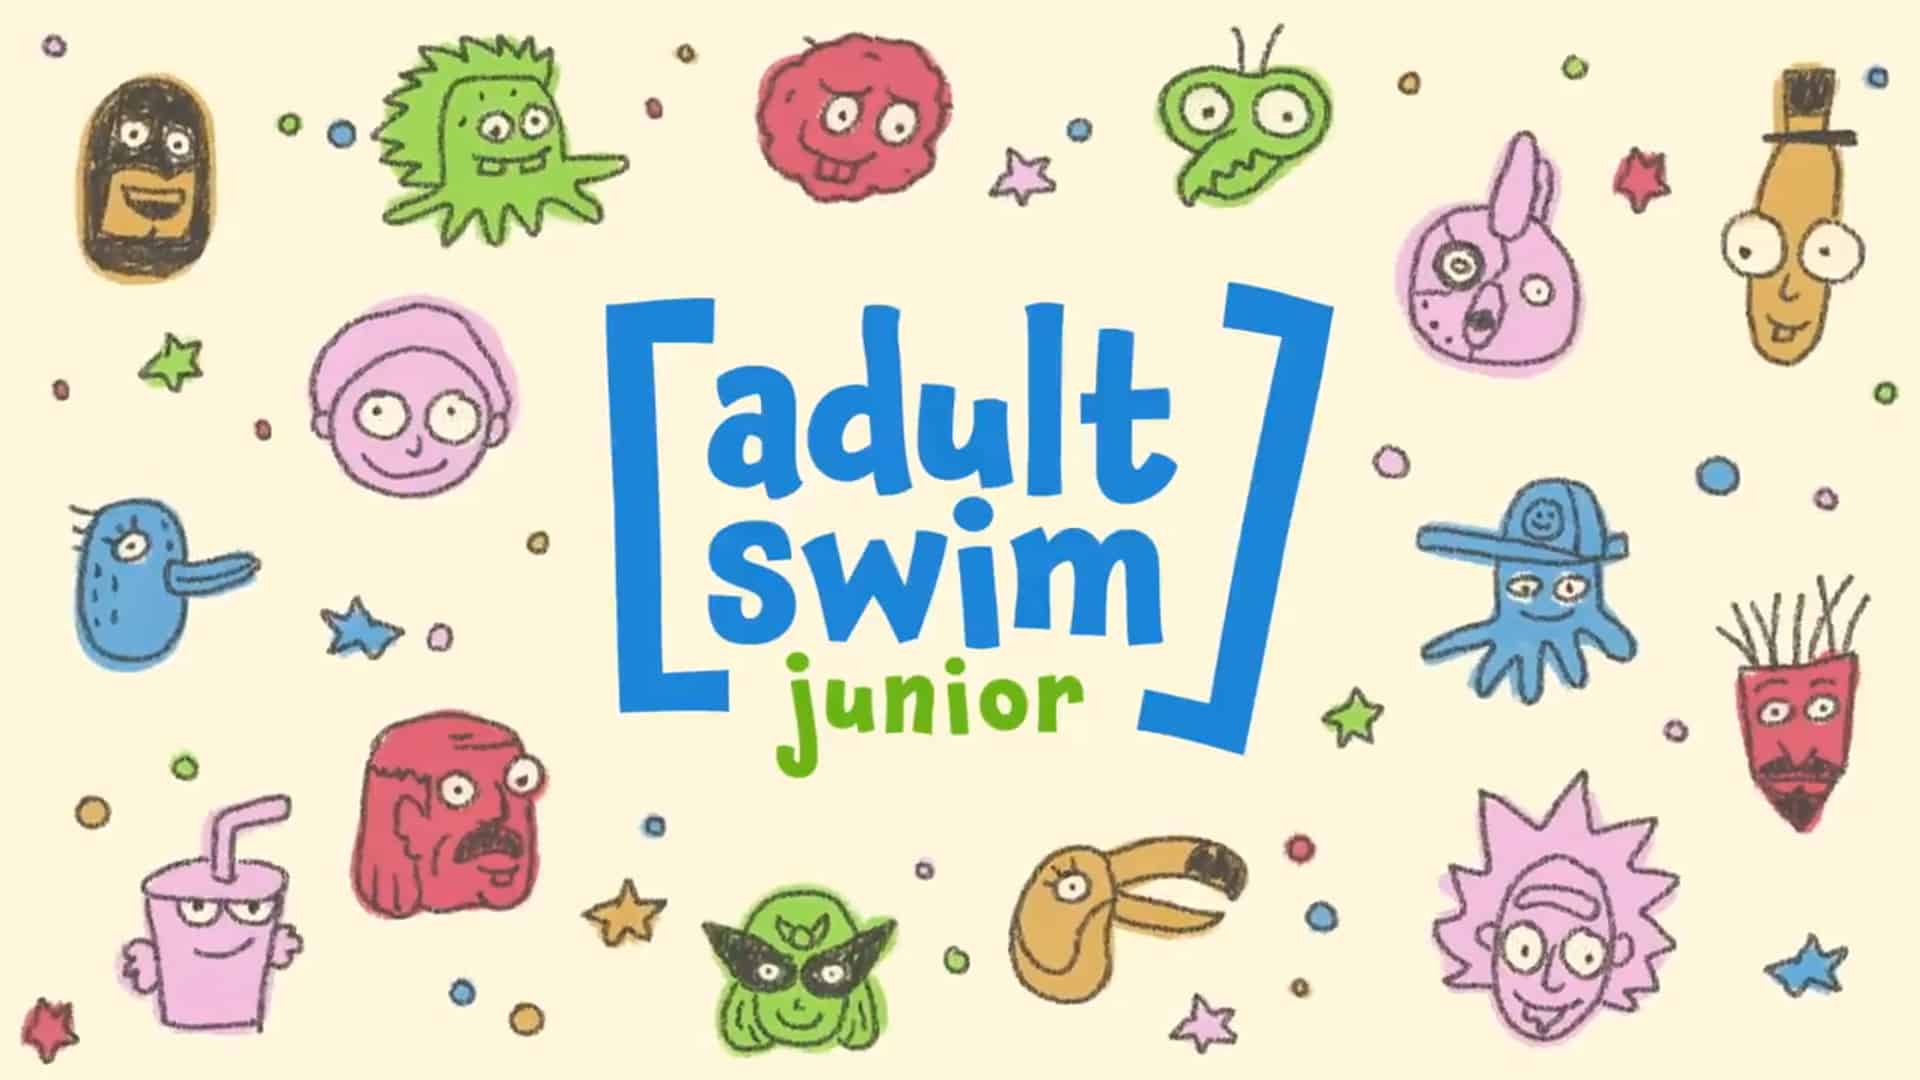 Adult Swim has revealed Adult Swim Jr